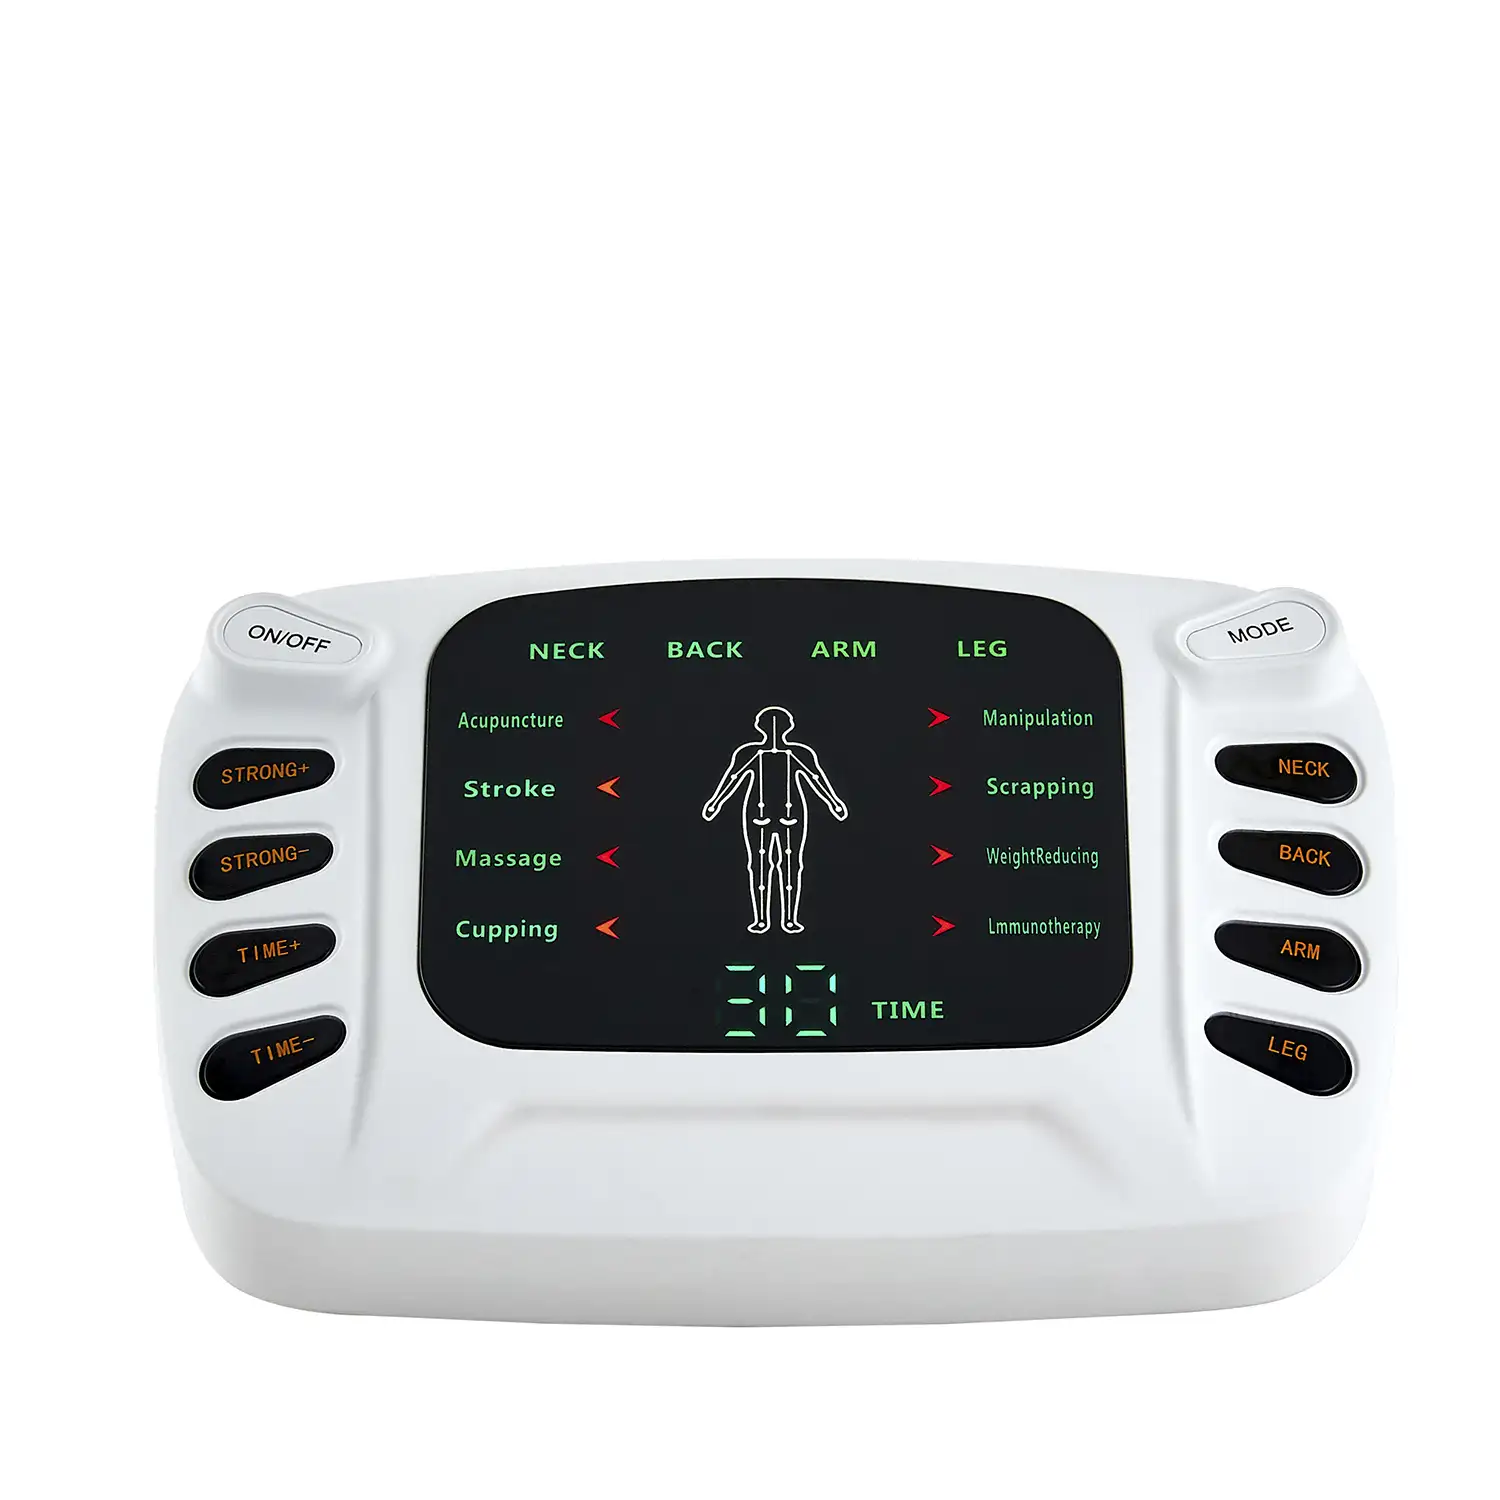 EMS Electroestimulador muscular intermedio TENS. Múltiples modos de masaje.